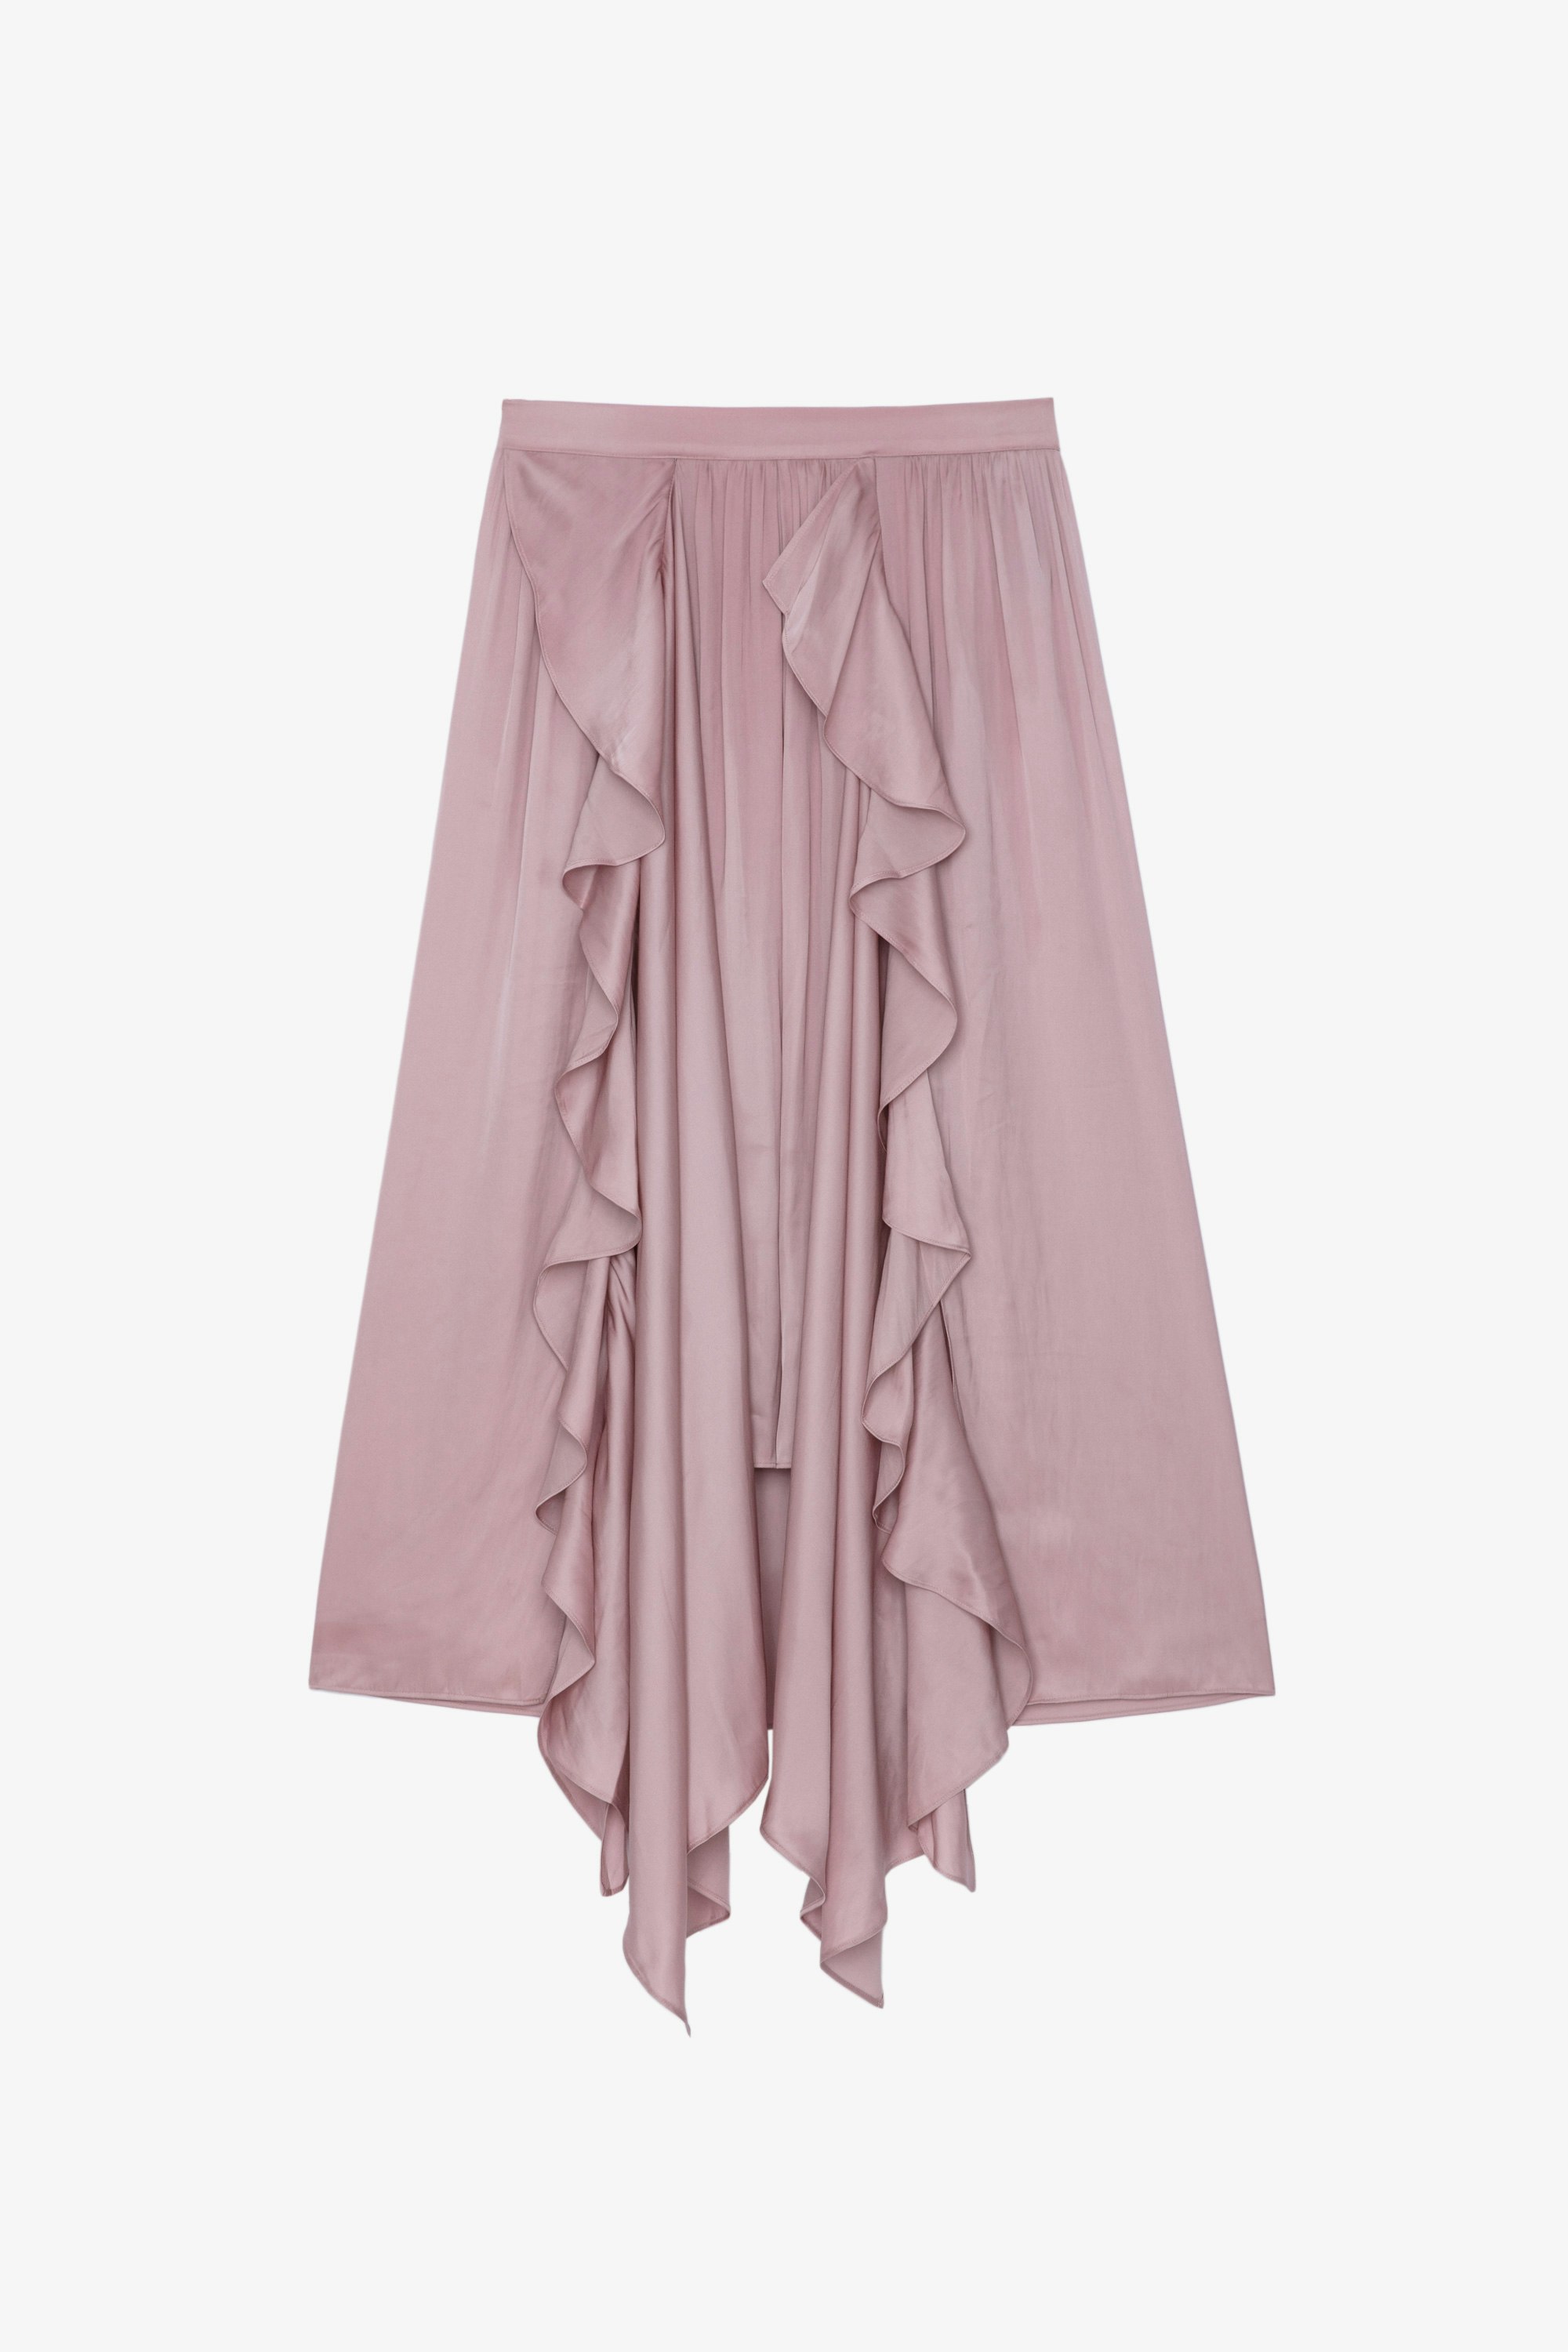 Jeb スカート Women’s long pink asymmetric skirt with ruffles